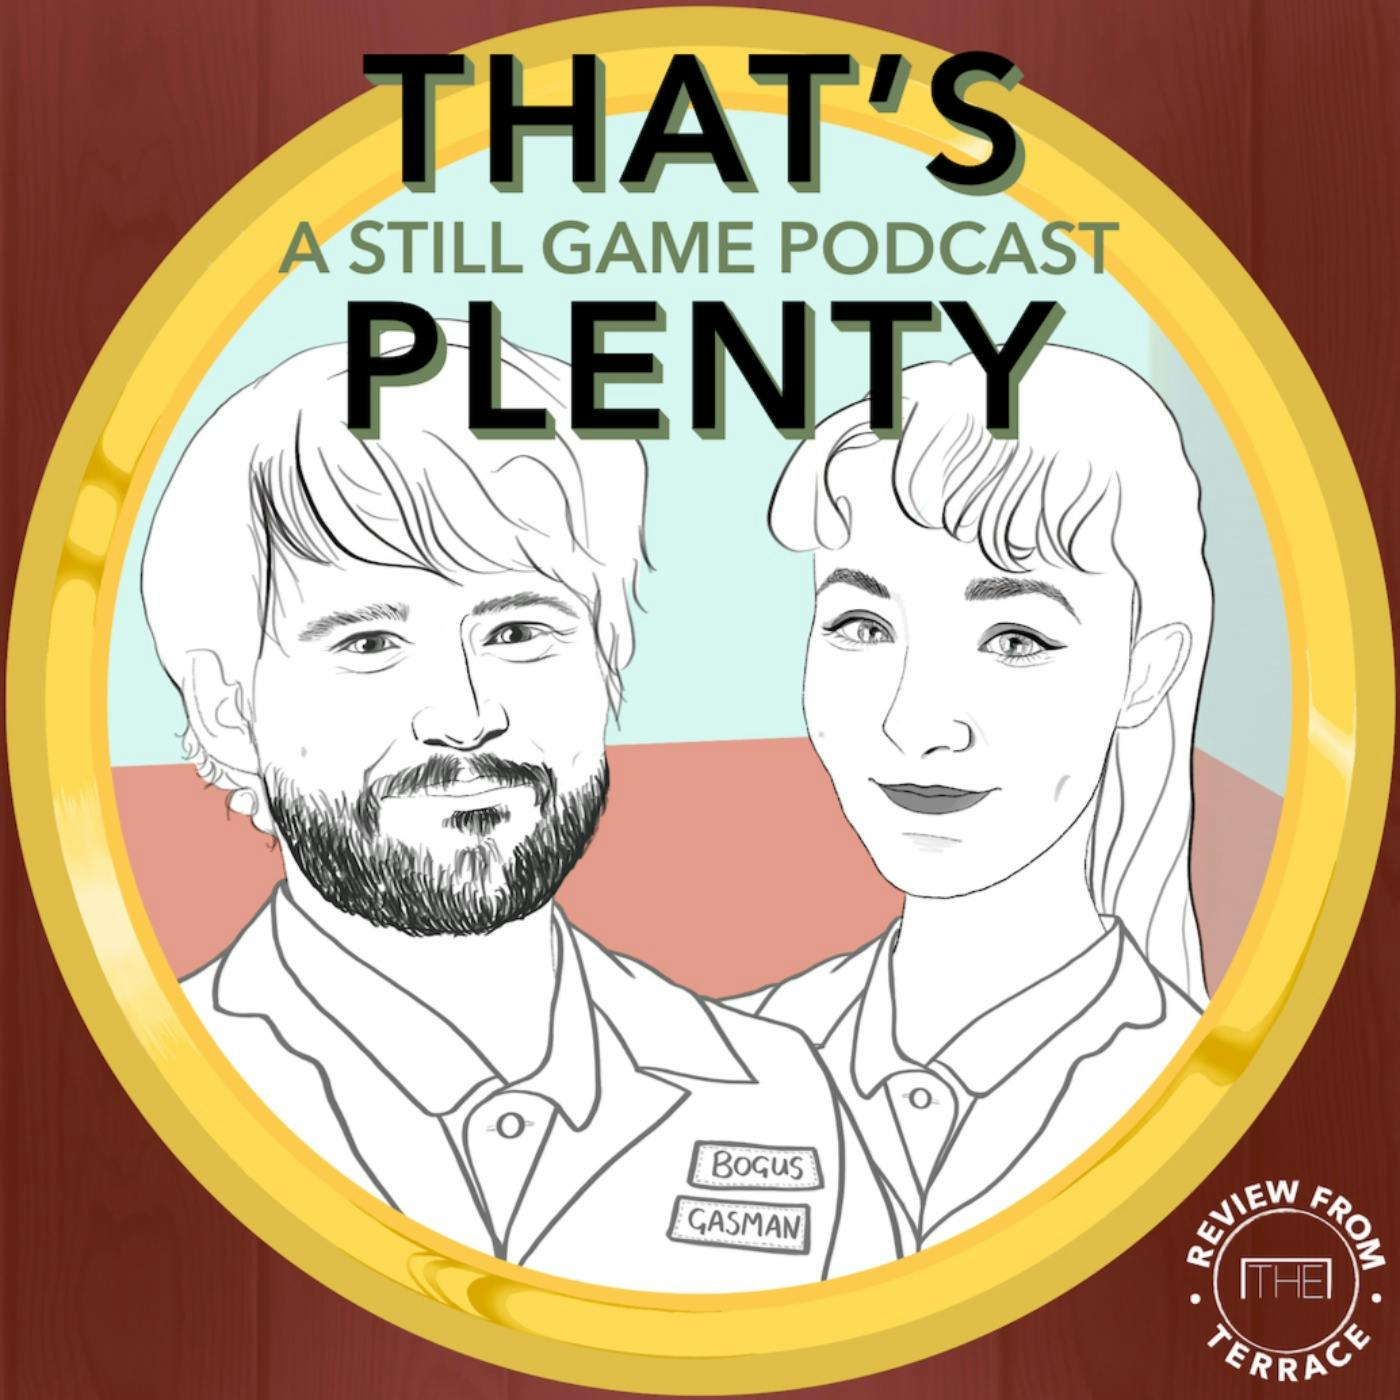 That's Plenty: A Still Game Podcast (episode 2: Faimly)